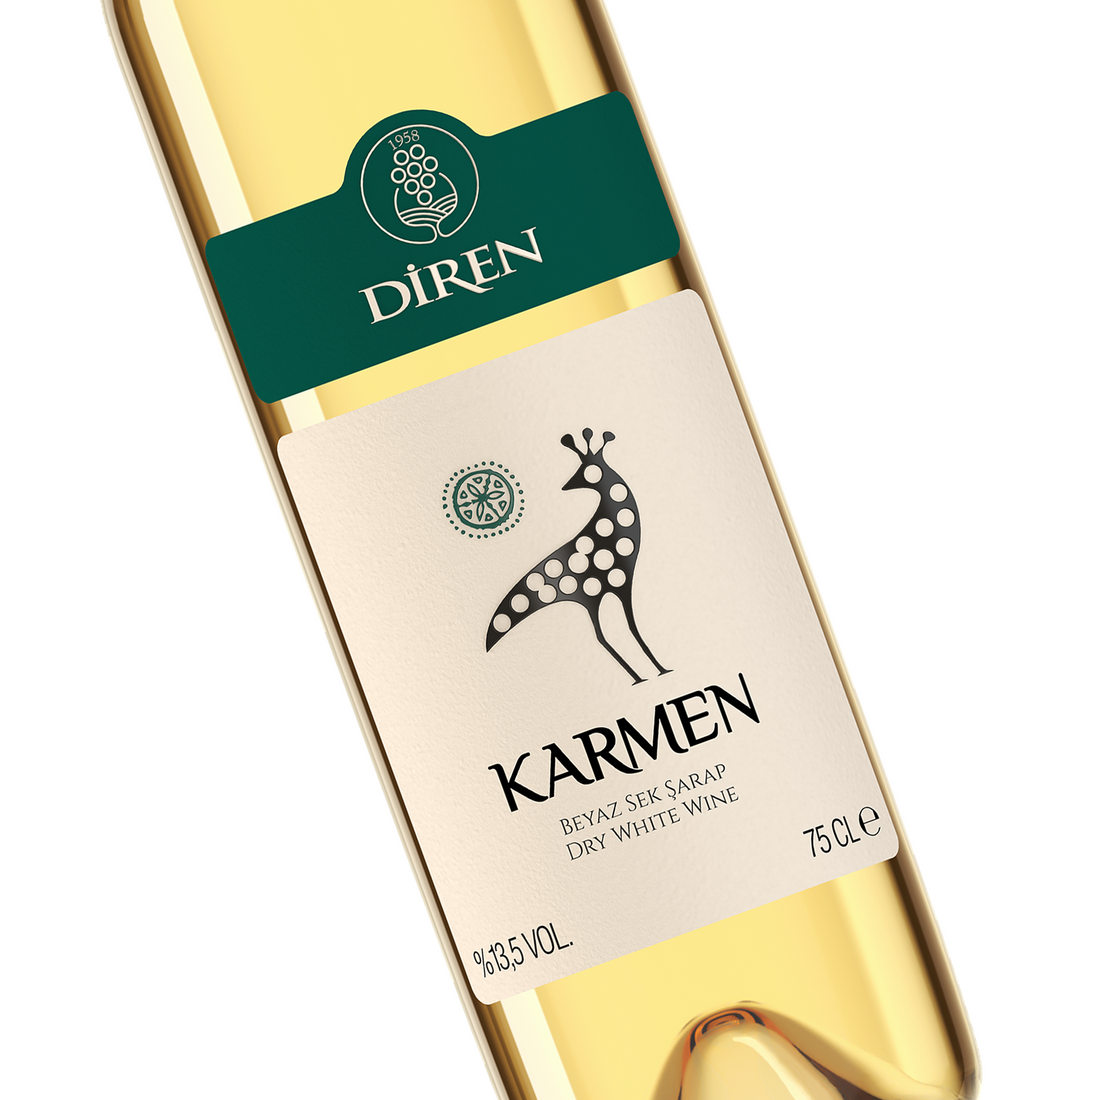 Diren Karmen White 750ml Dry Turkish Wine | Diren Karmen Beyaz Sek Sarap | Dry White Wine